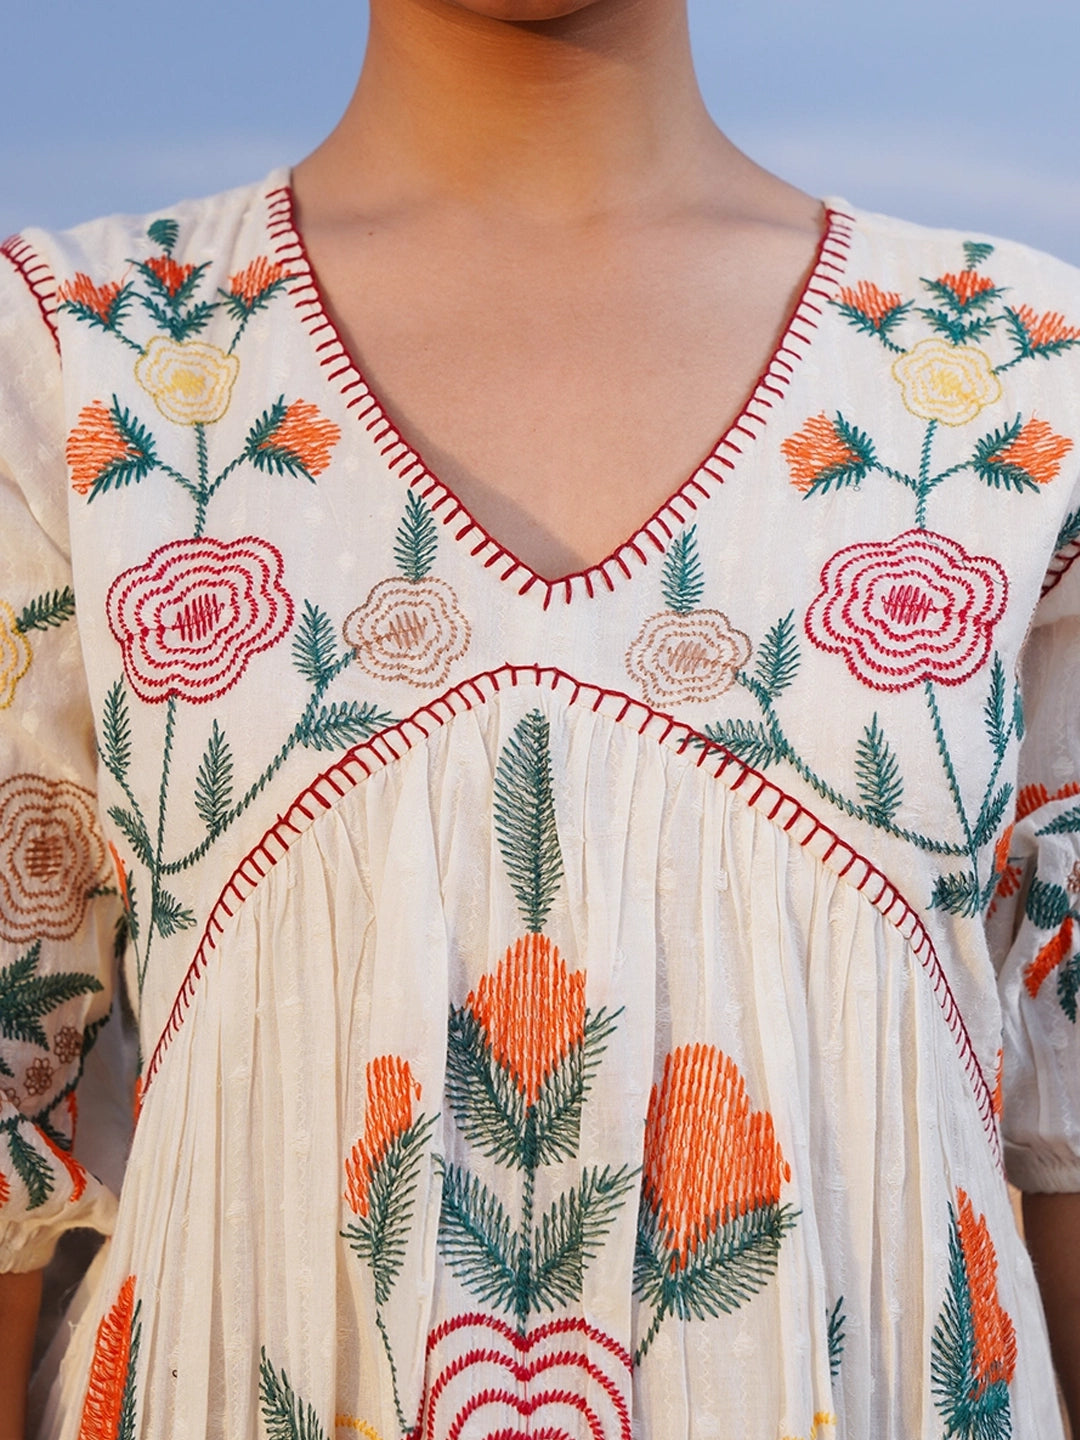 Amazing Embroidery Short Dress💗